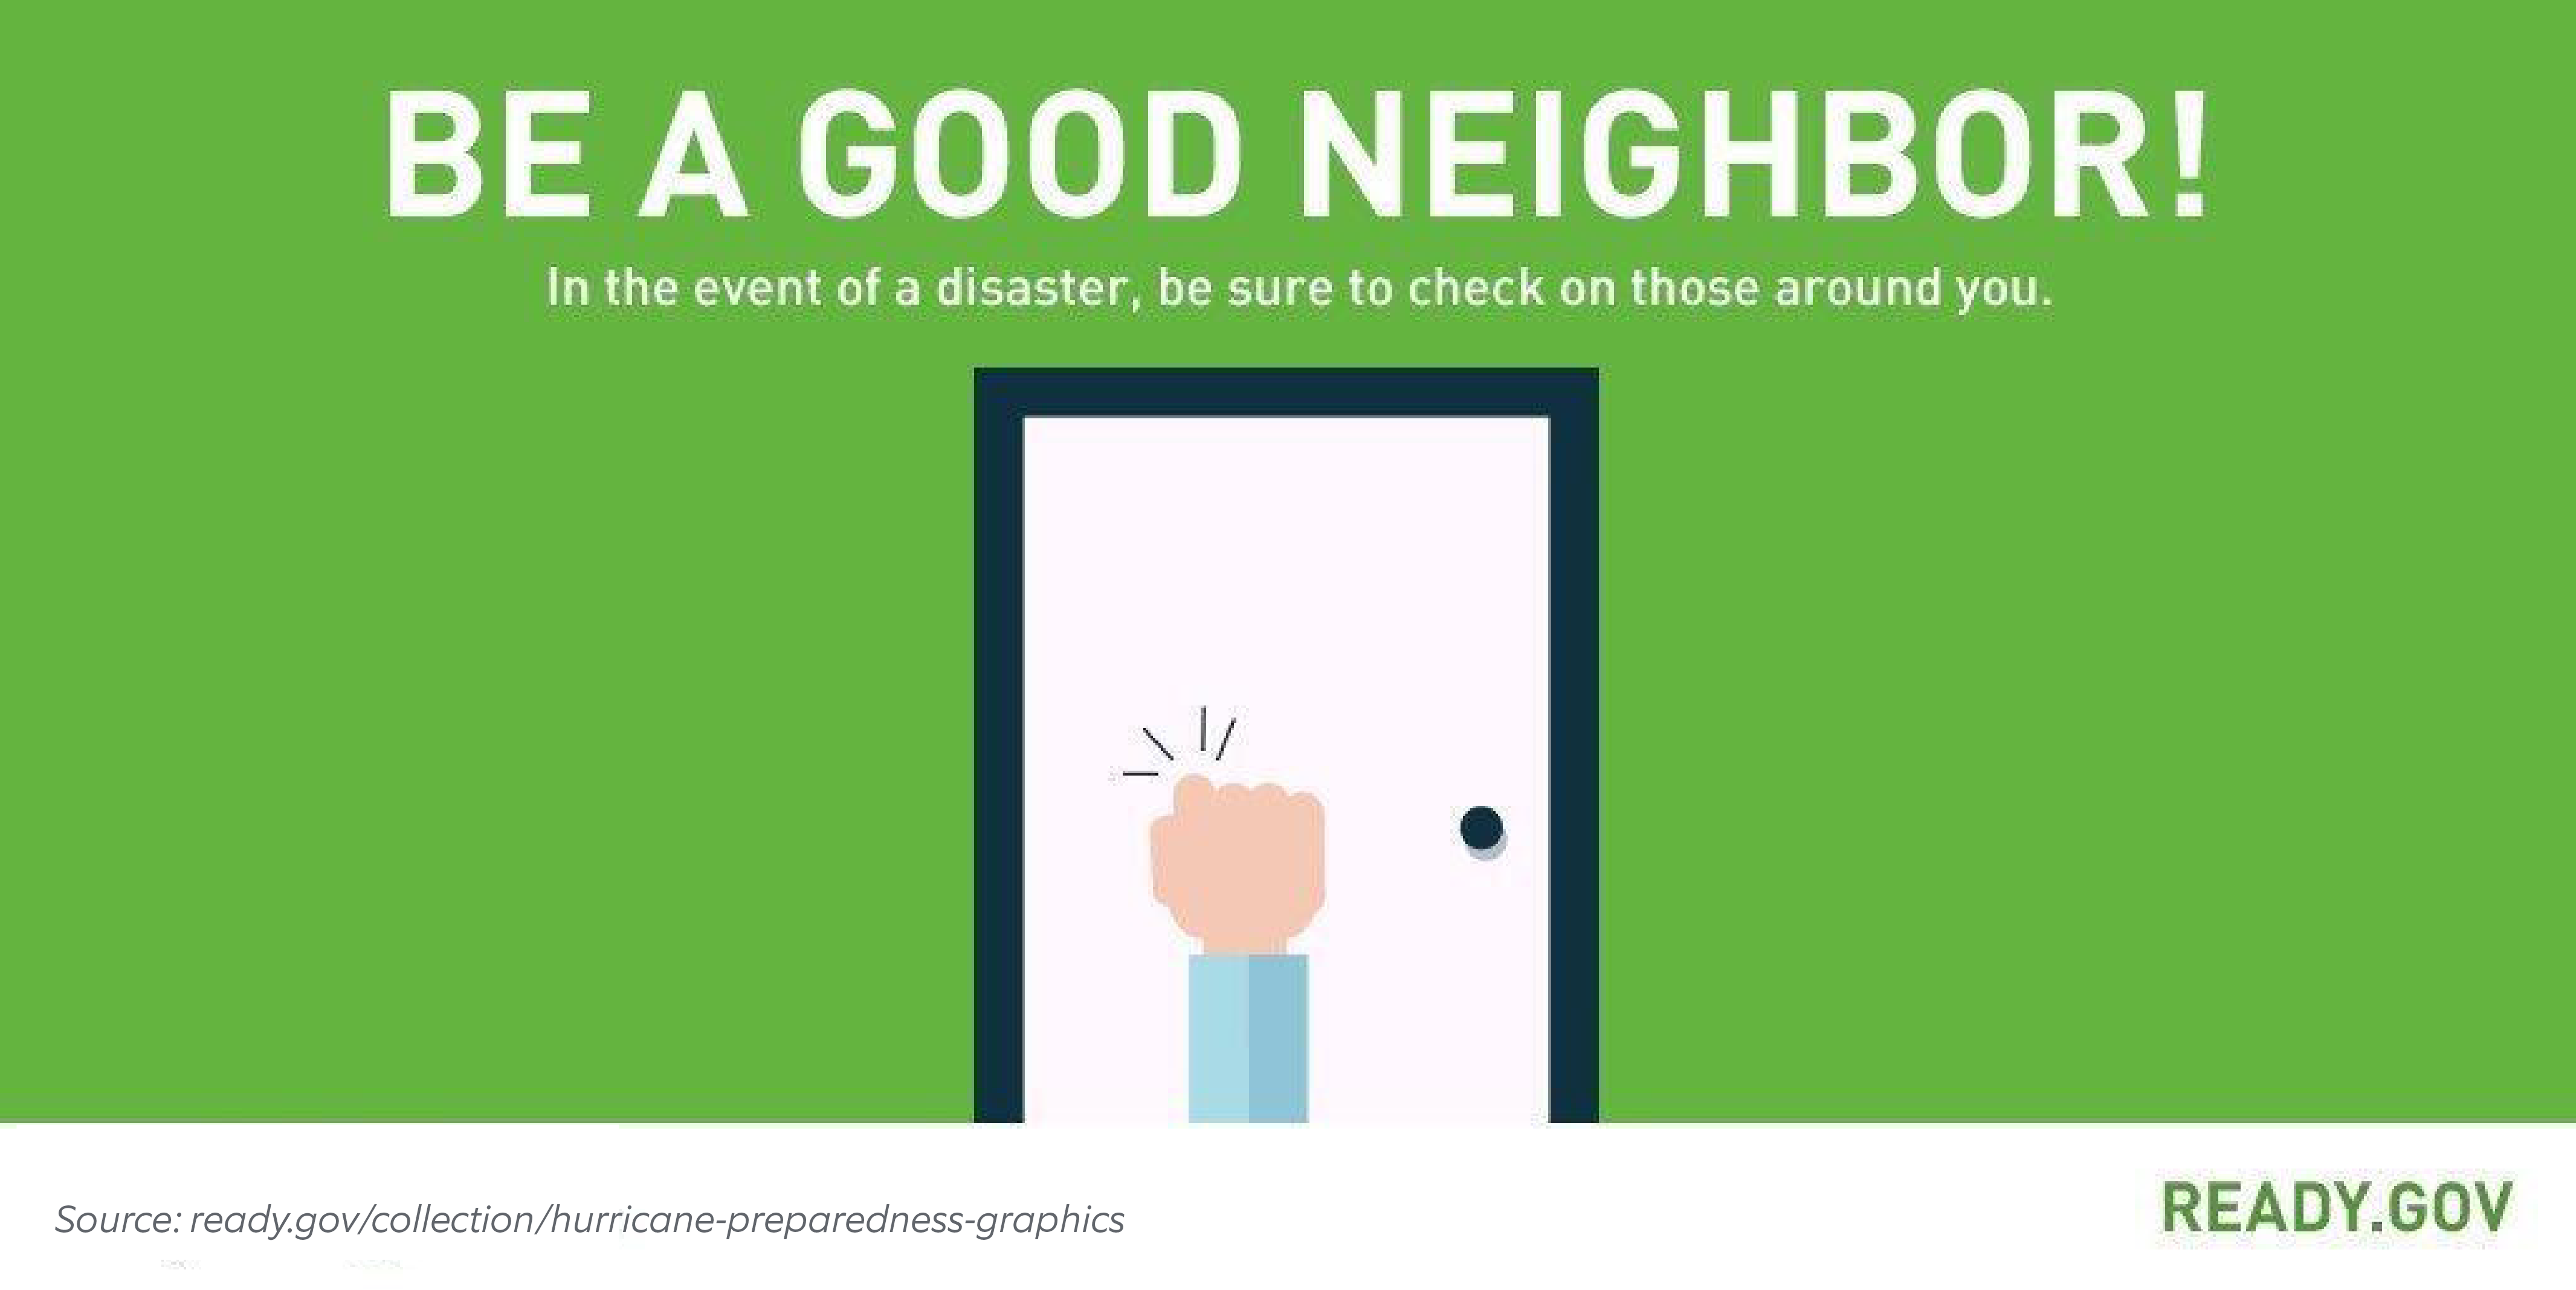 Hurricane_preparedness-_be_a_good_neighbor.png